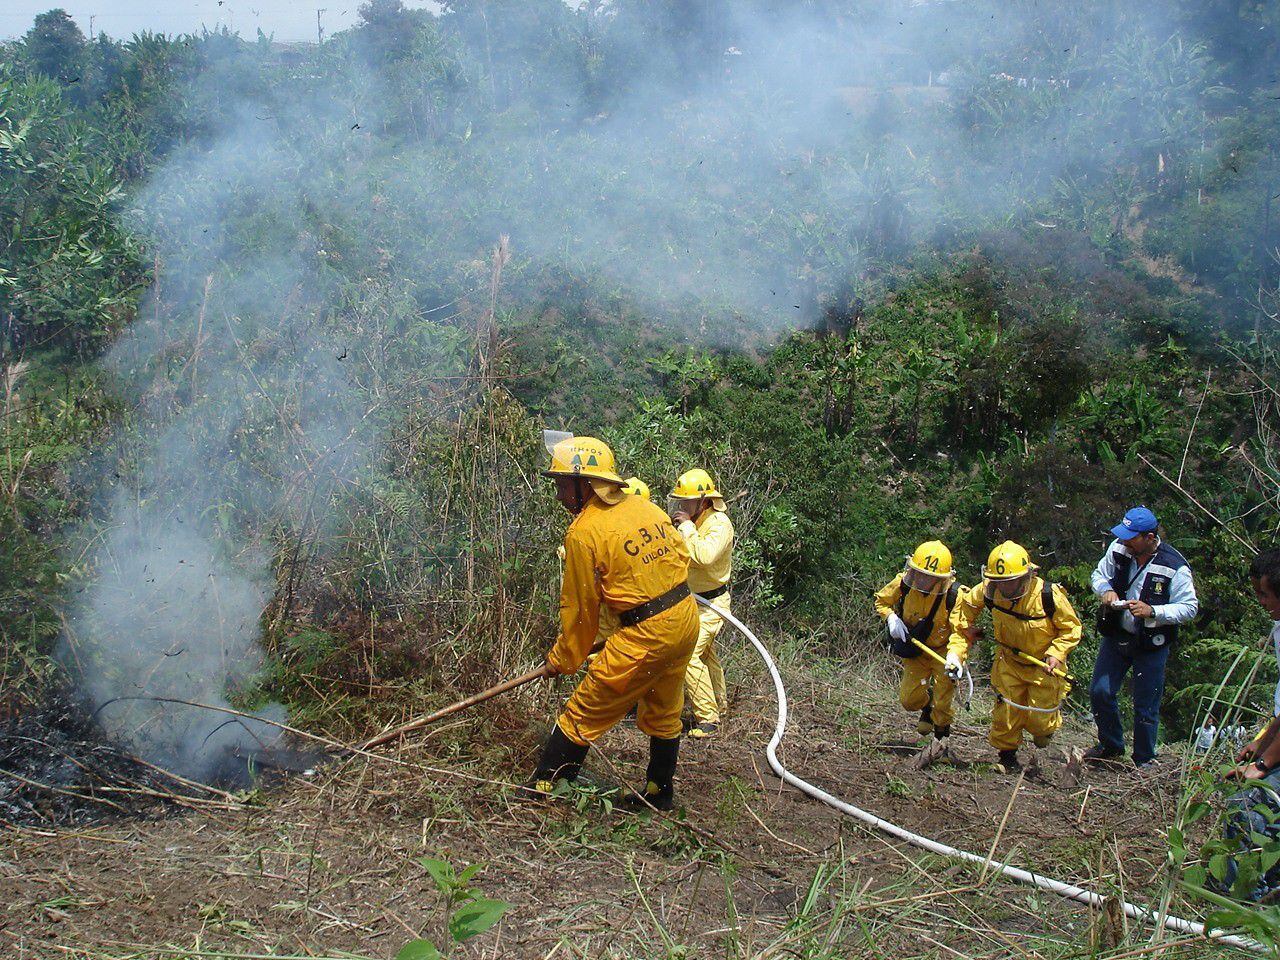 Varios municipios del Valle son vulnerables a incendios forestales, según la CVC.